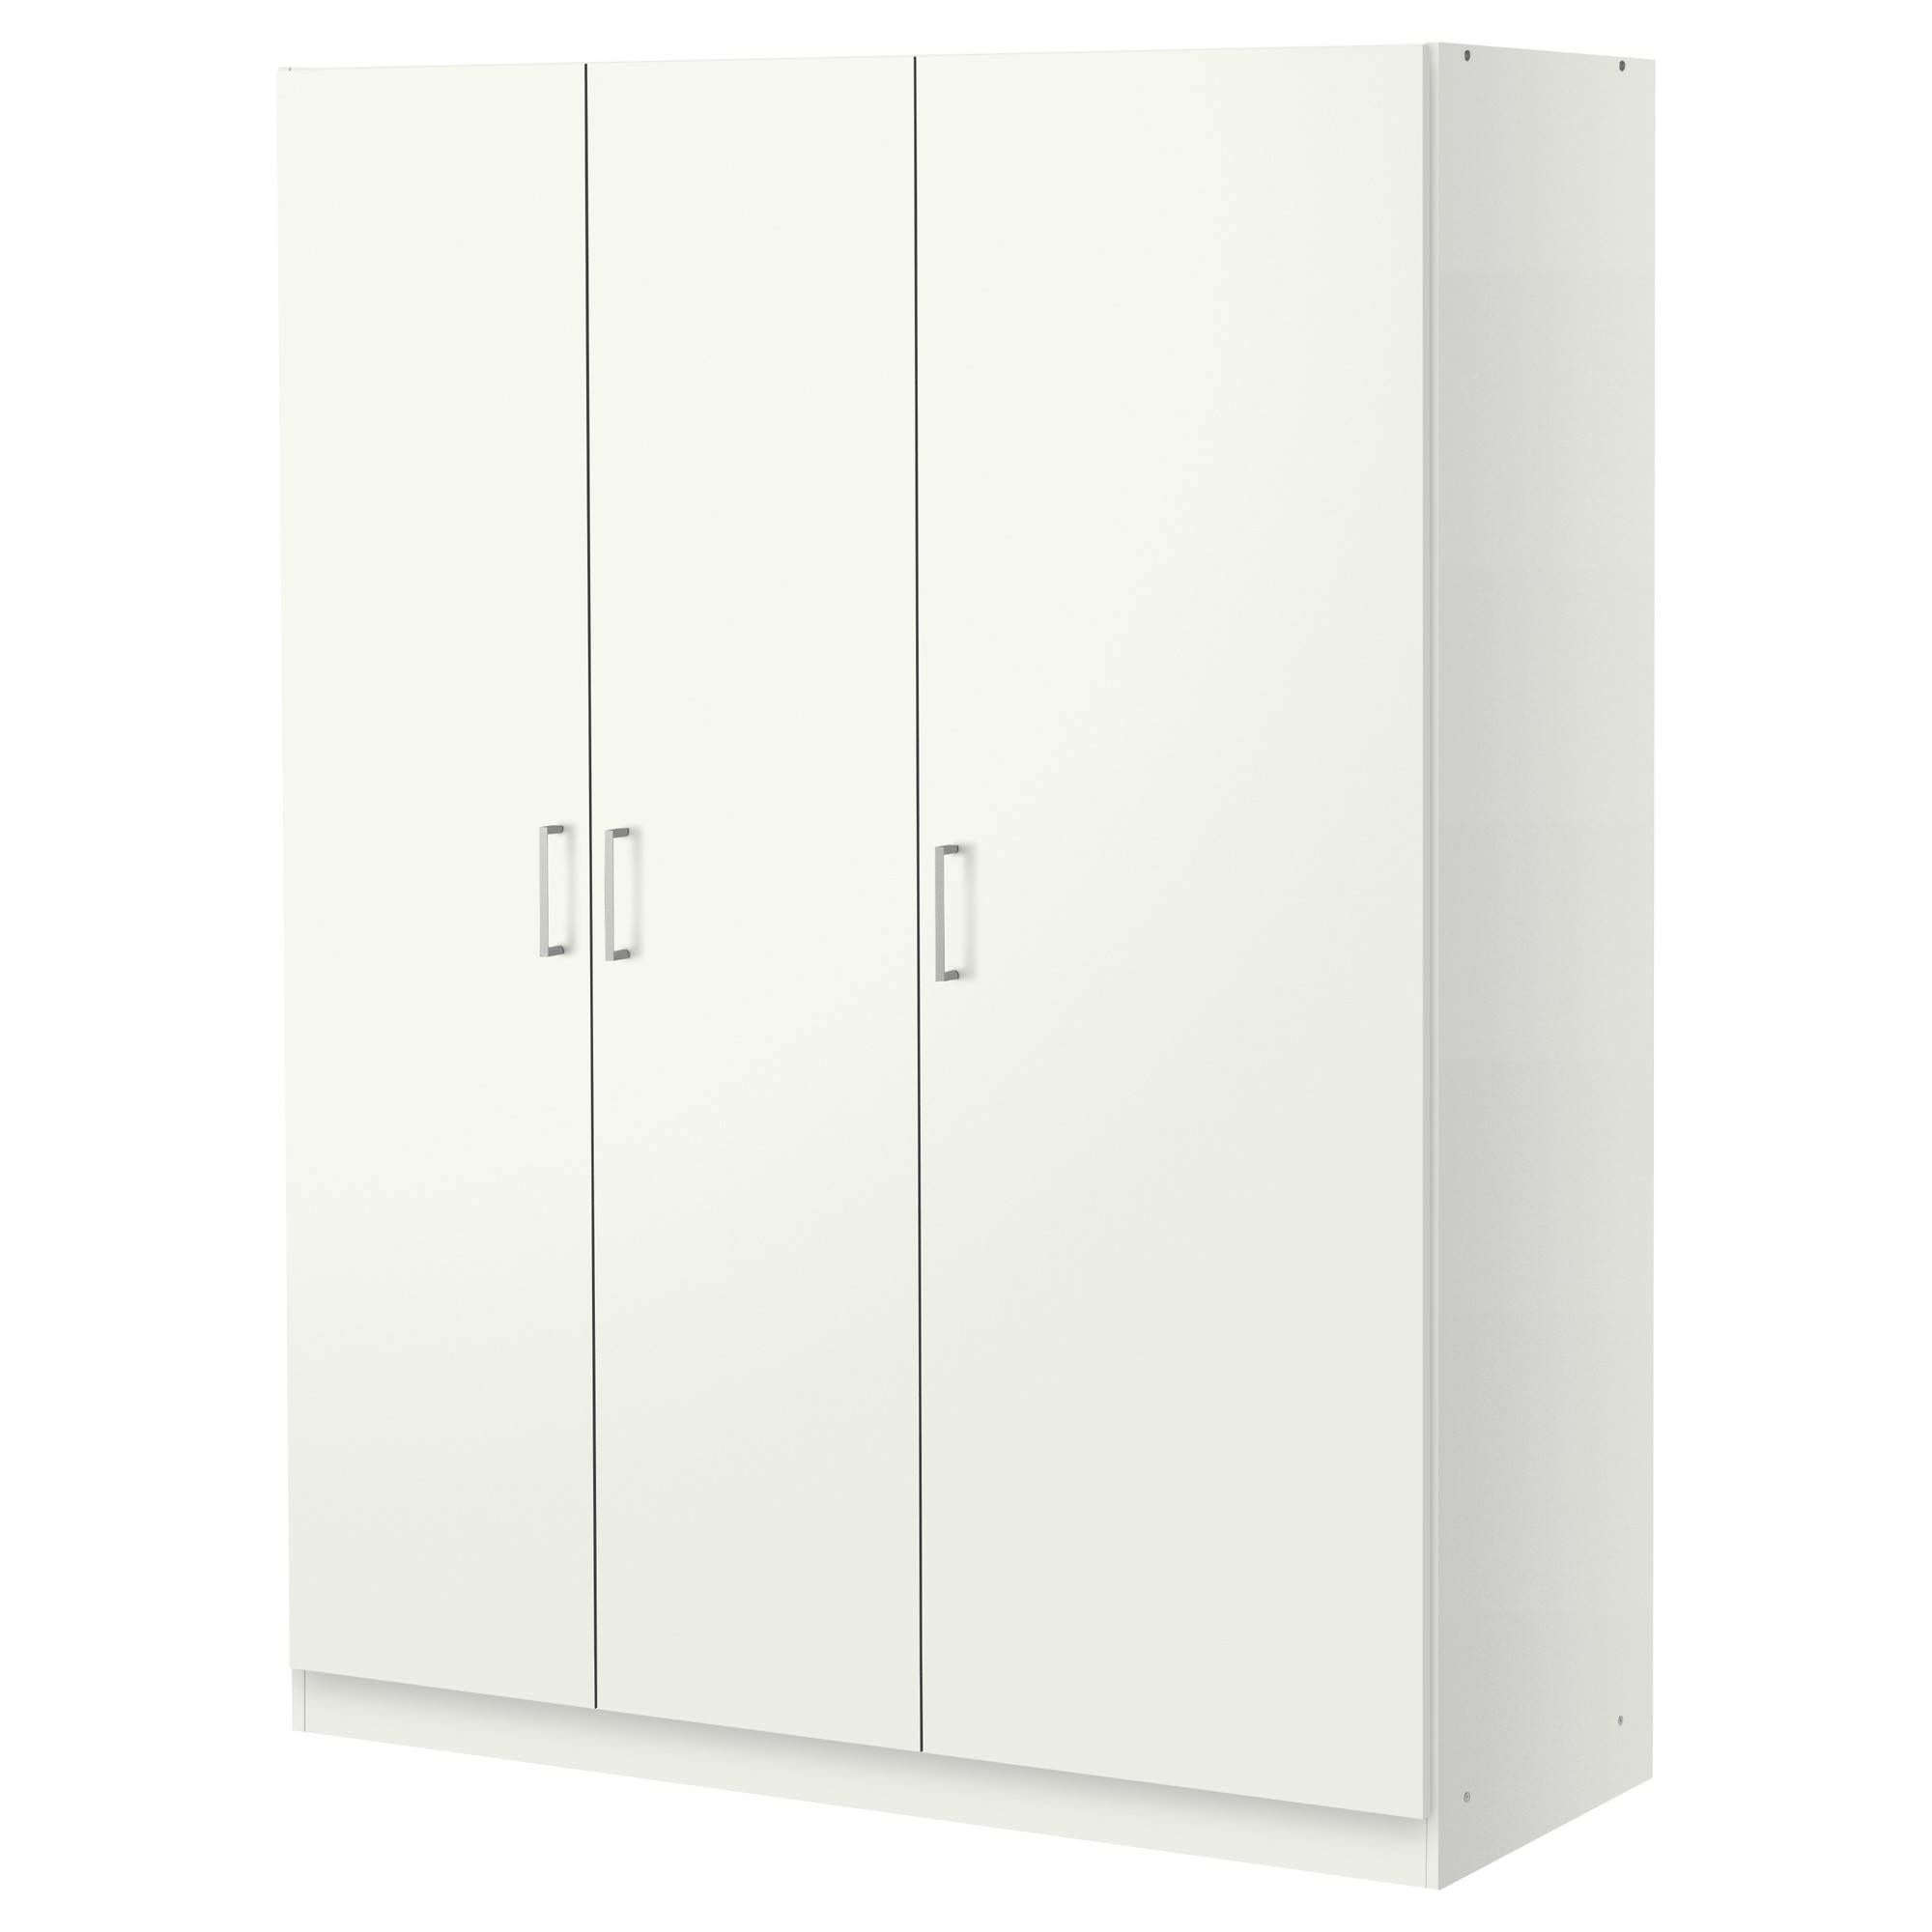 Dombås Wardrobe White 140x181 Cm – Ikea With Regard To Cheap 3 Door Wardrobes (View 7 of 15)